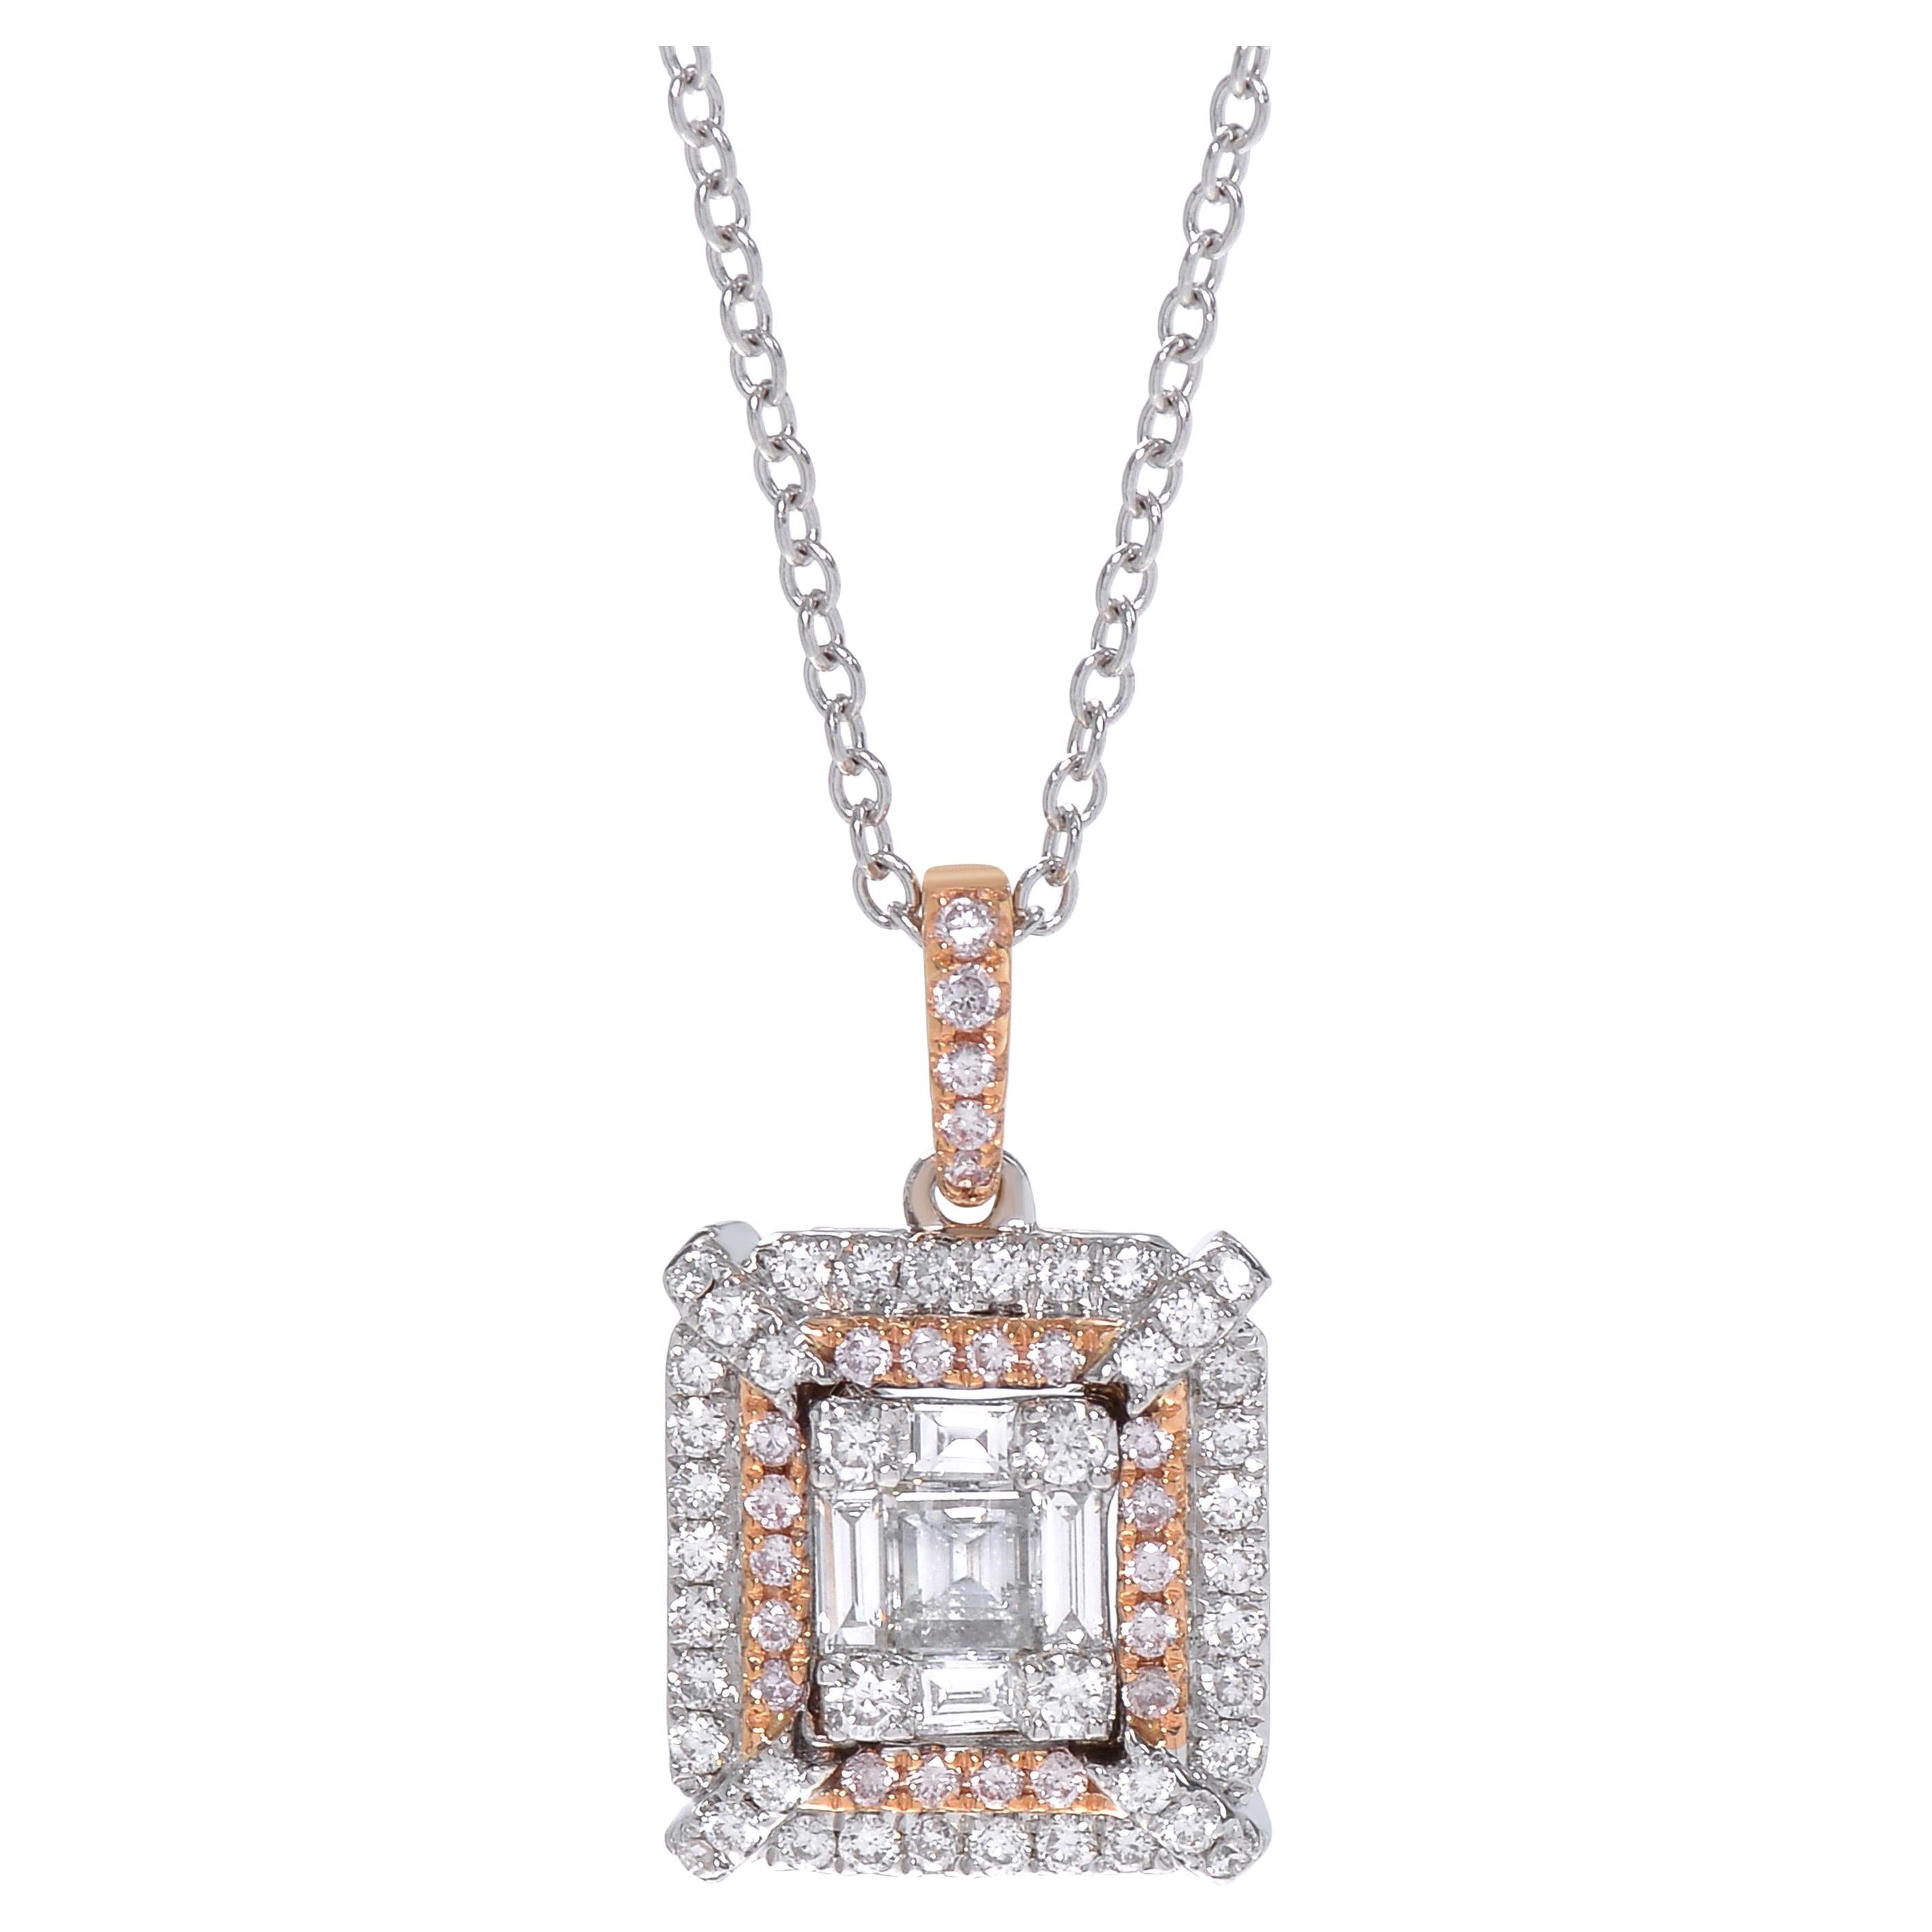 Gregg Ruth 18k Gold, White Diamond & Pink Diamond Pendant Necklace